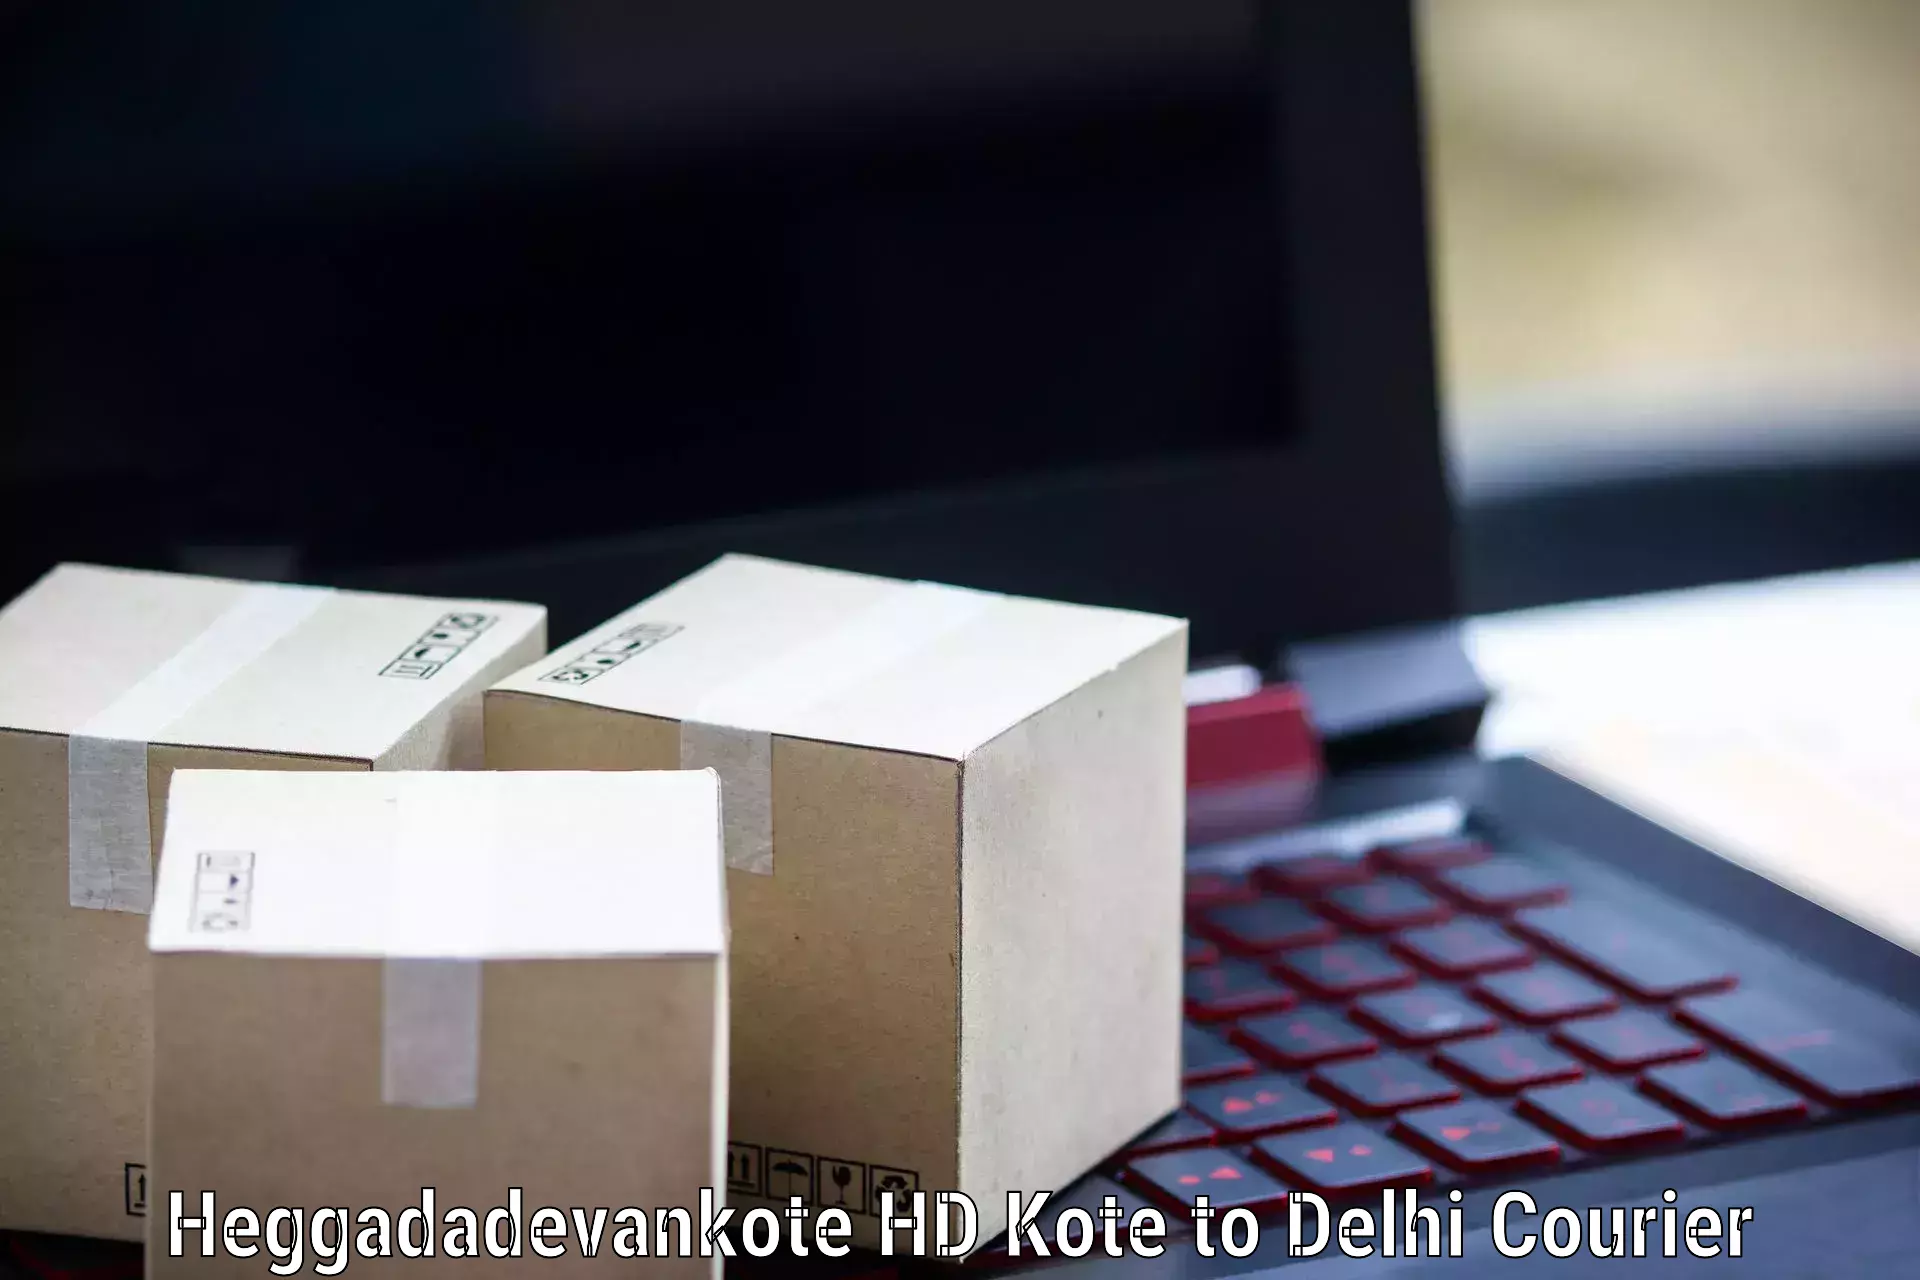 Express package delivery Heggadadevankote HD Kote to Subhash Nagar